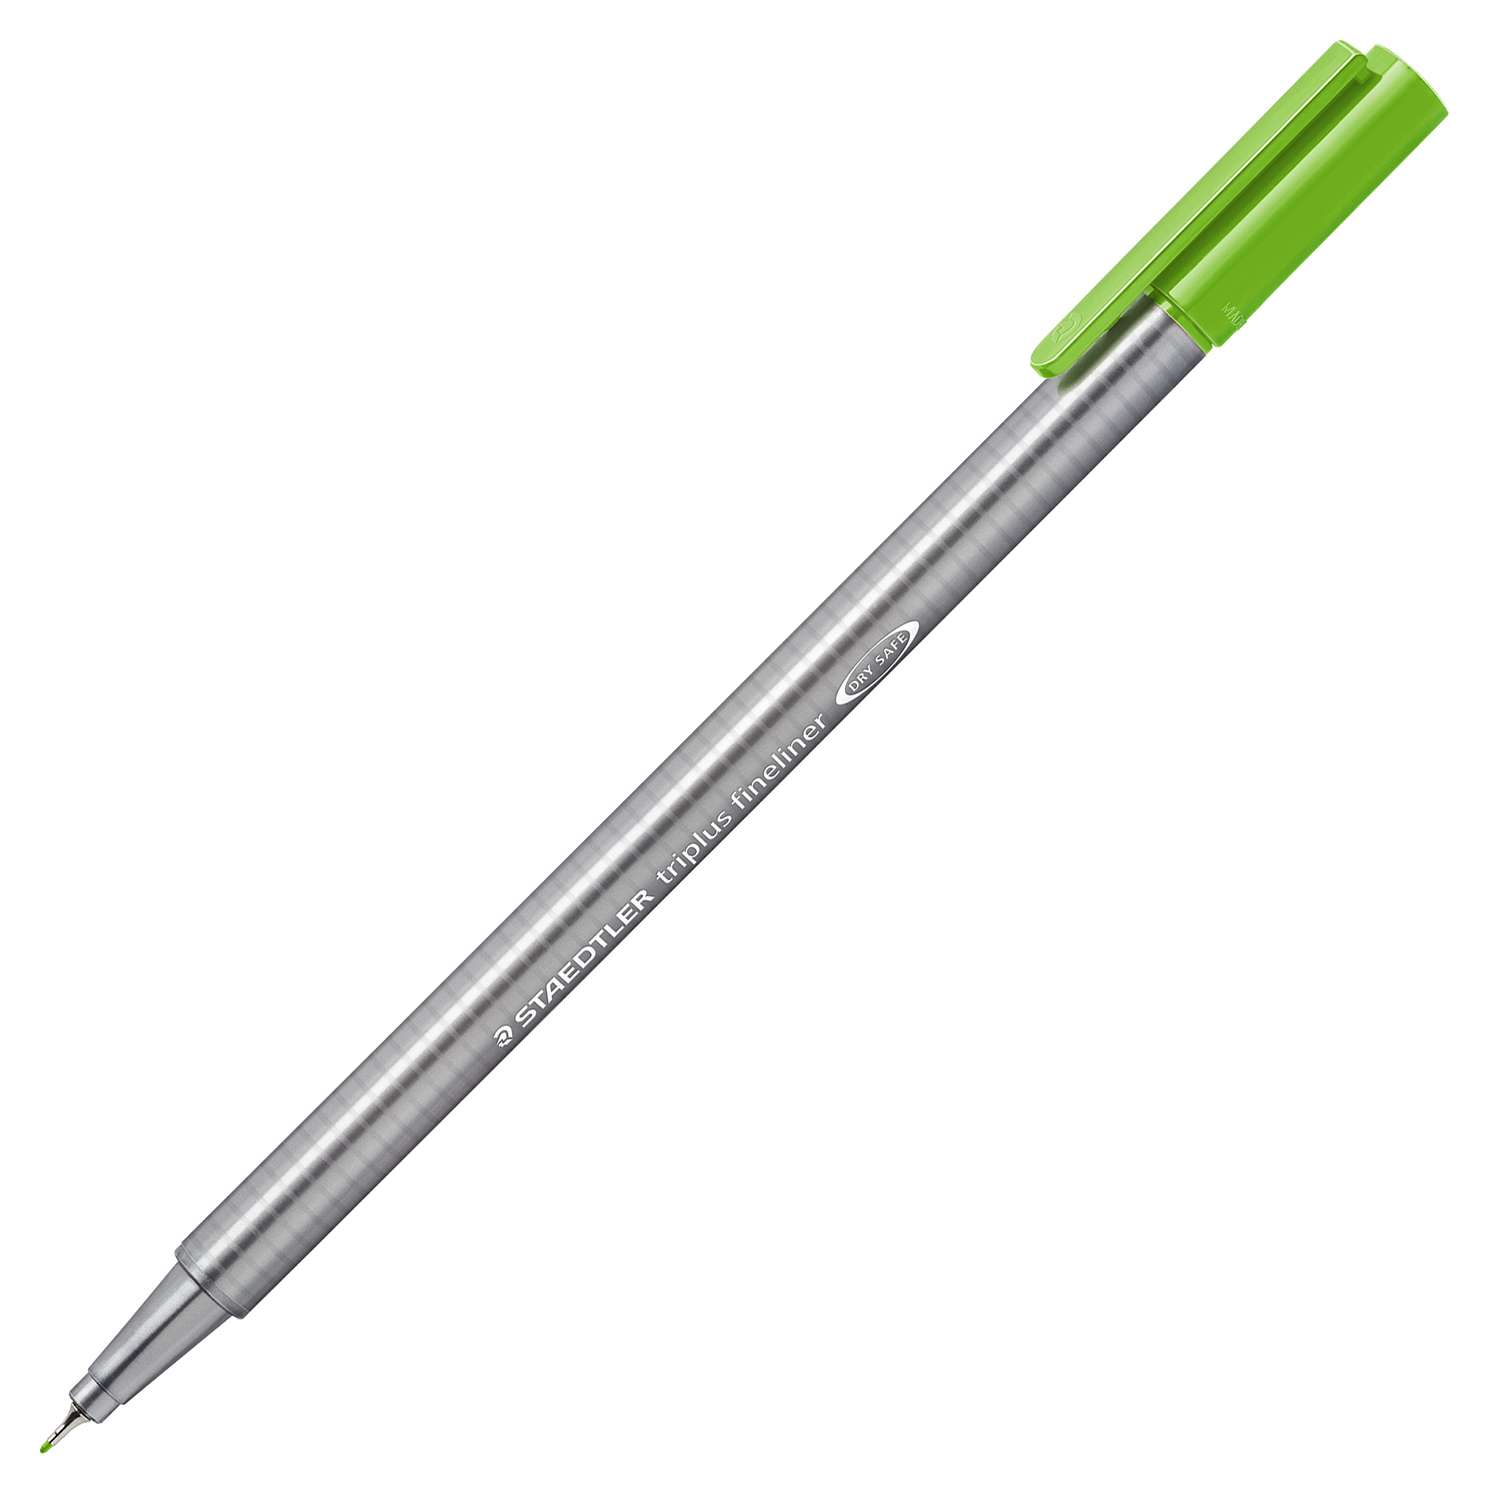 Ручка капиллярная Staedtler Triplus трехгранная Светло-зеленая Ван Дейк - фото 1